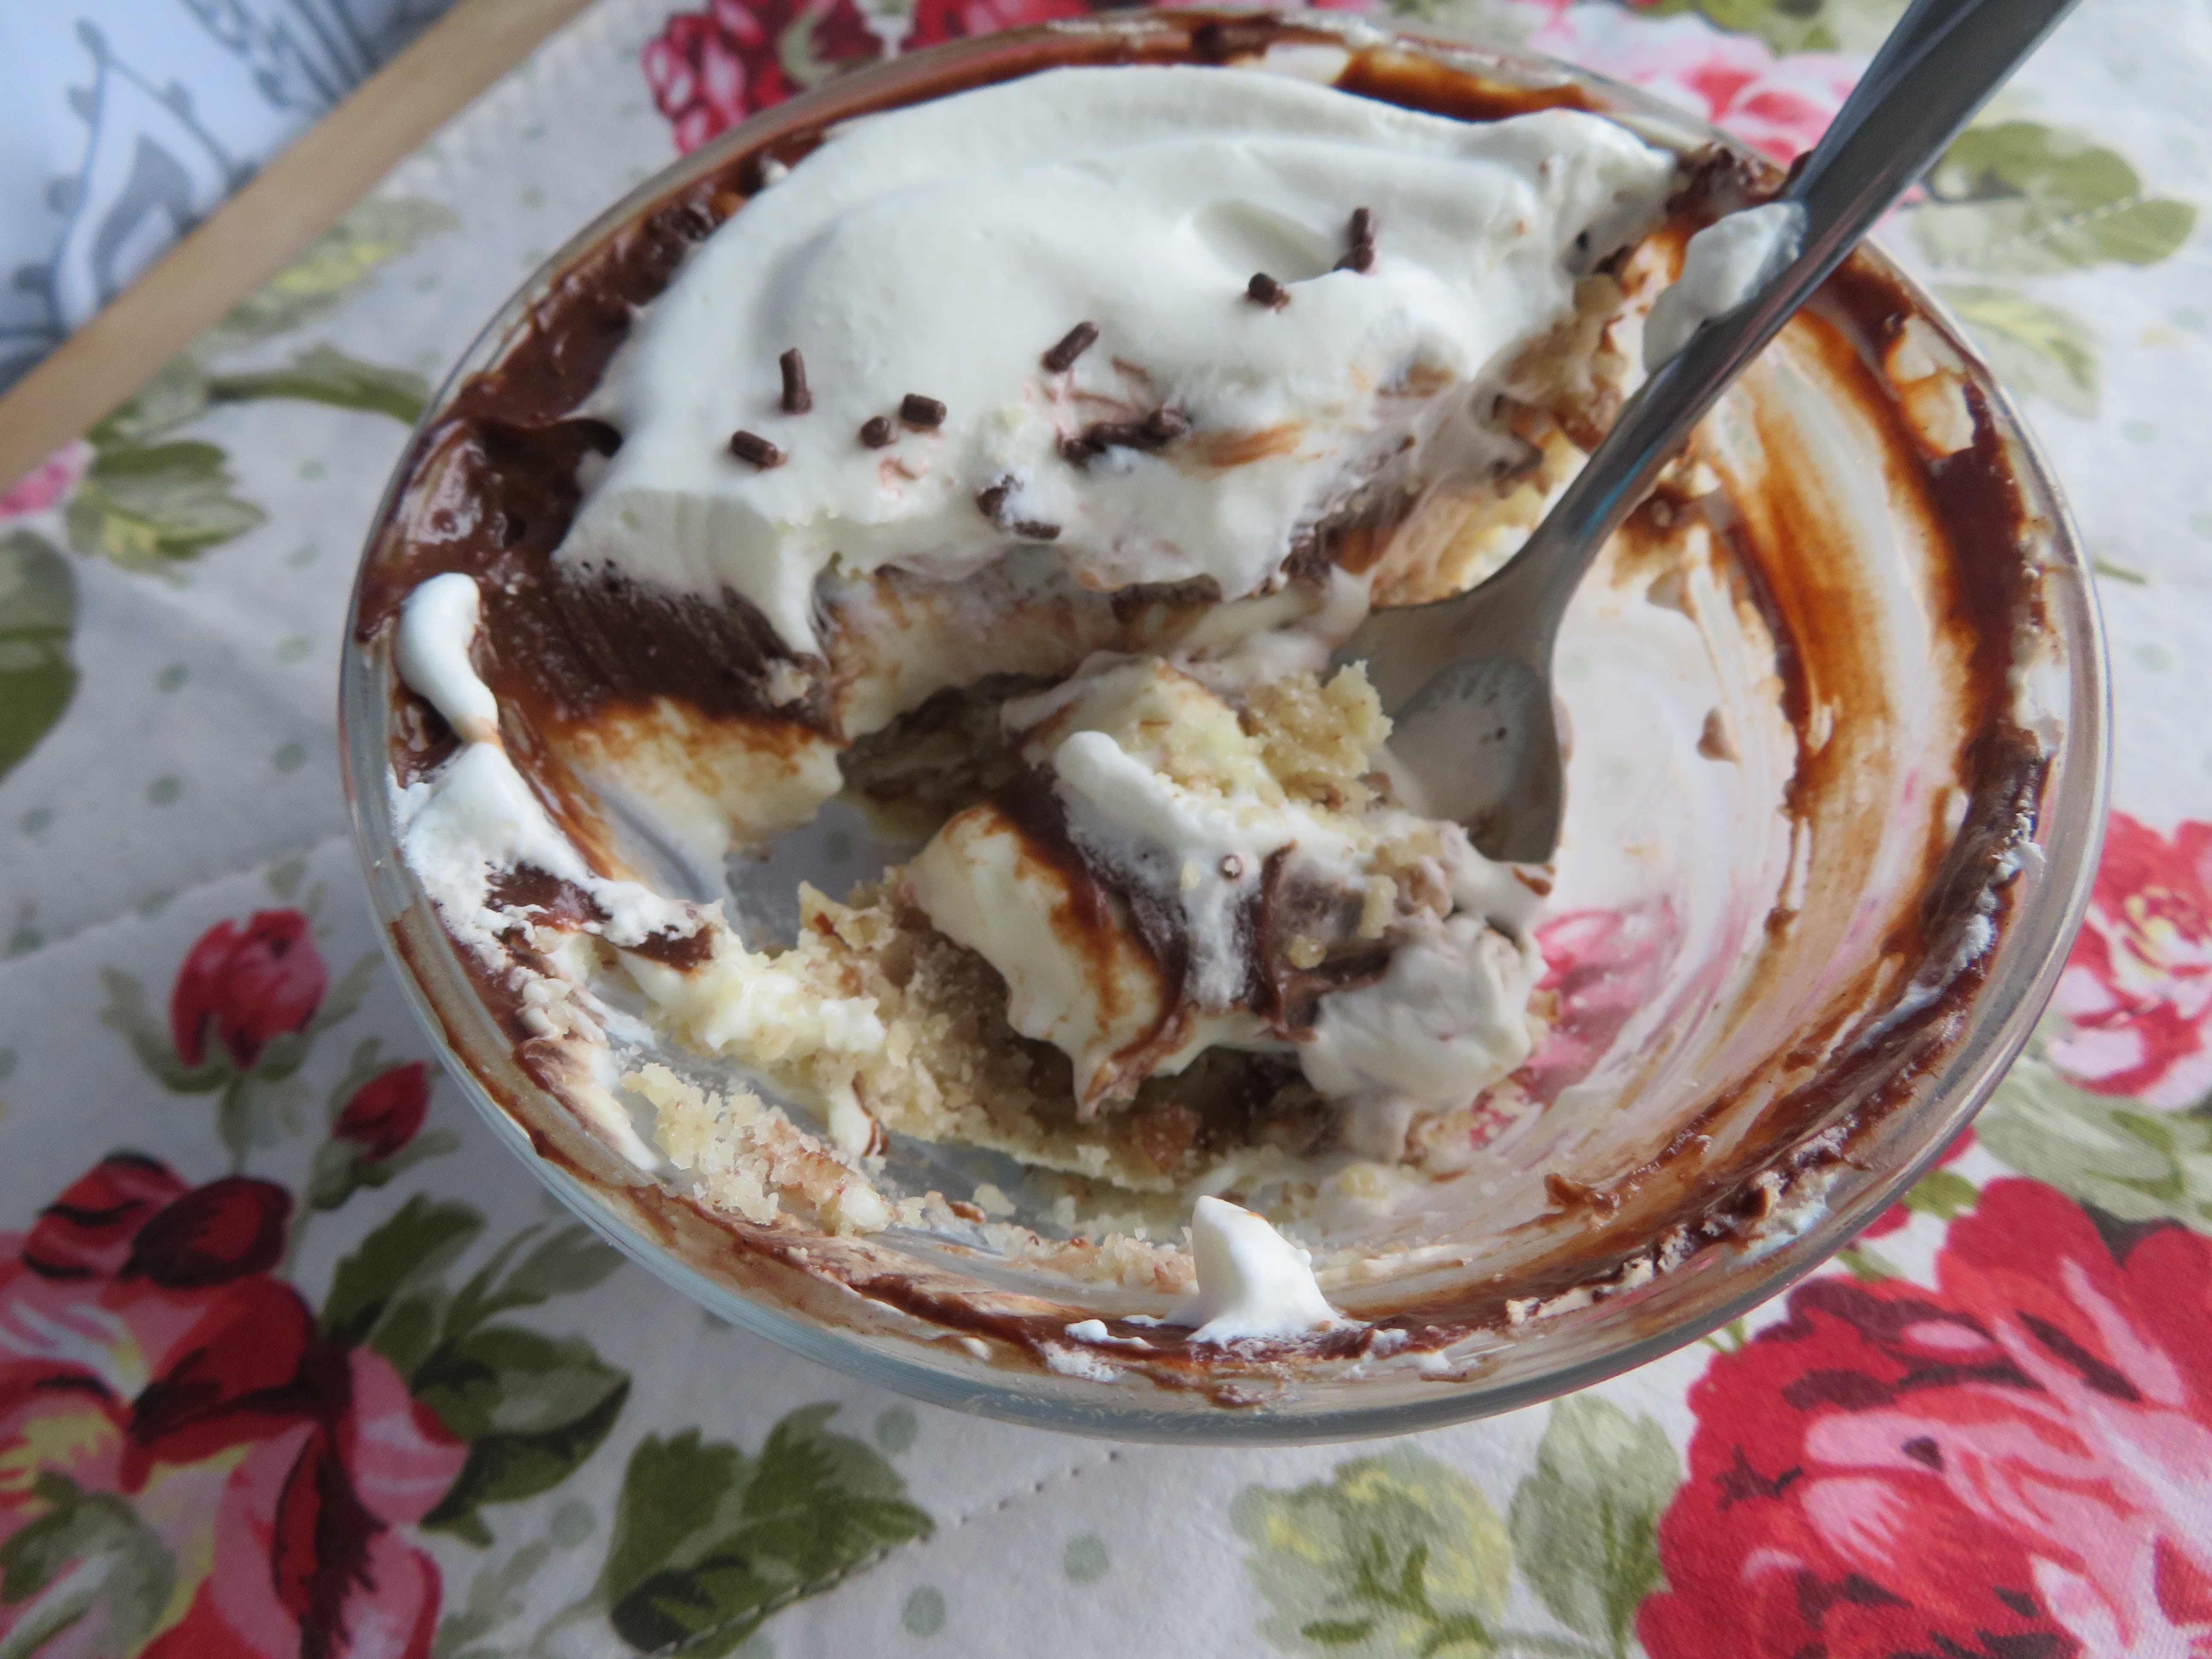 Layered Chocolate Pudding Dessert - The BakerMama